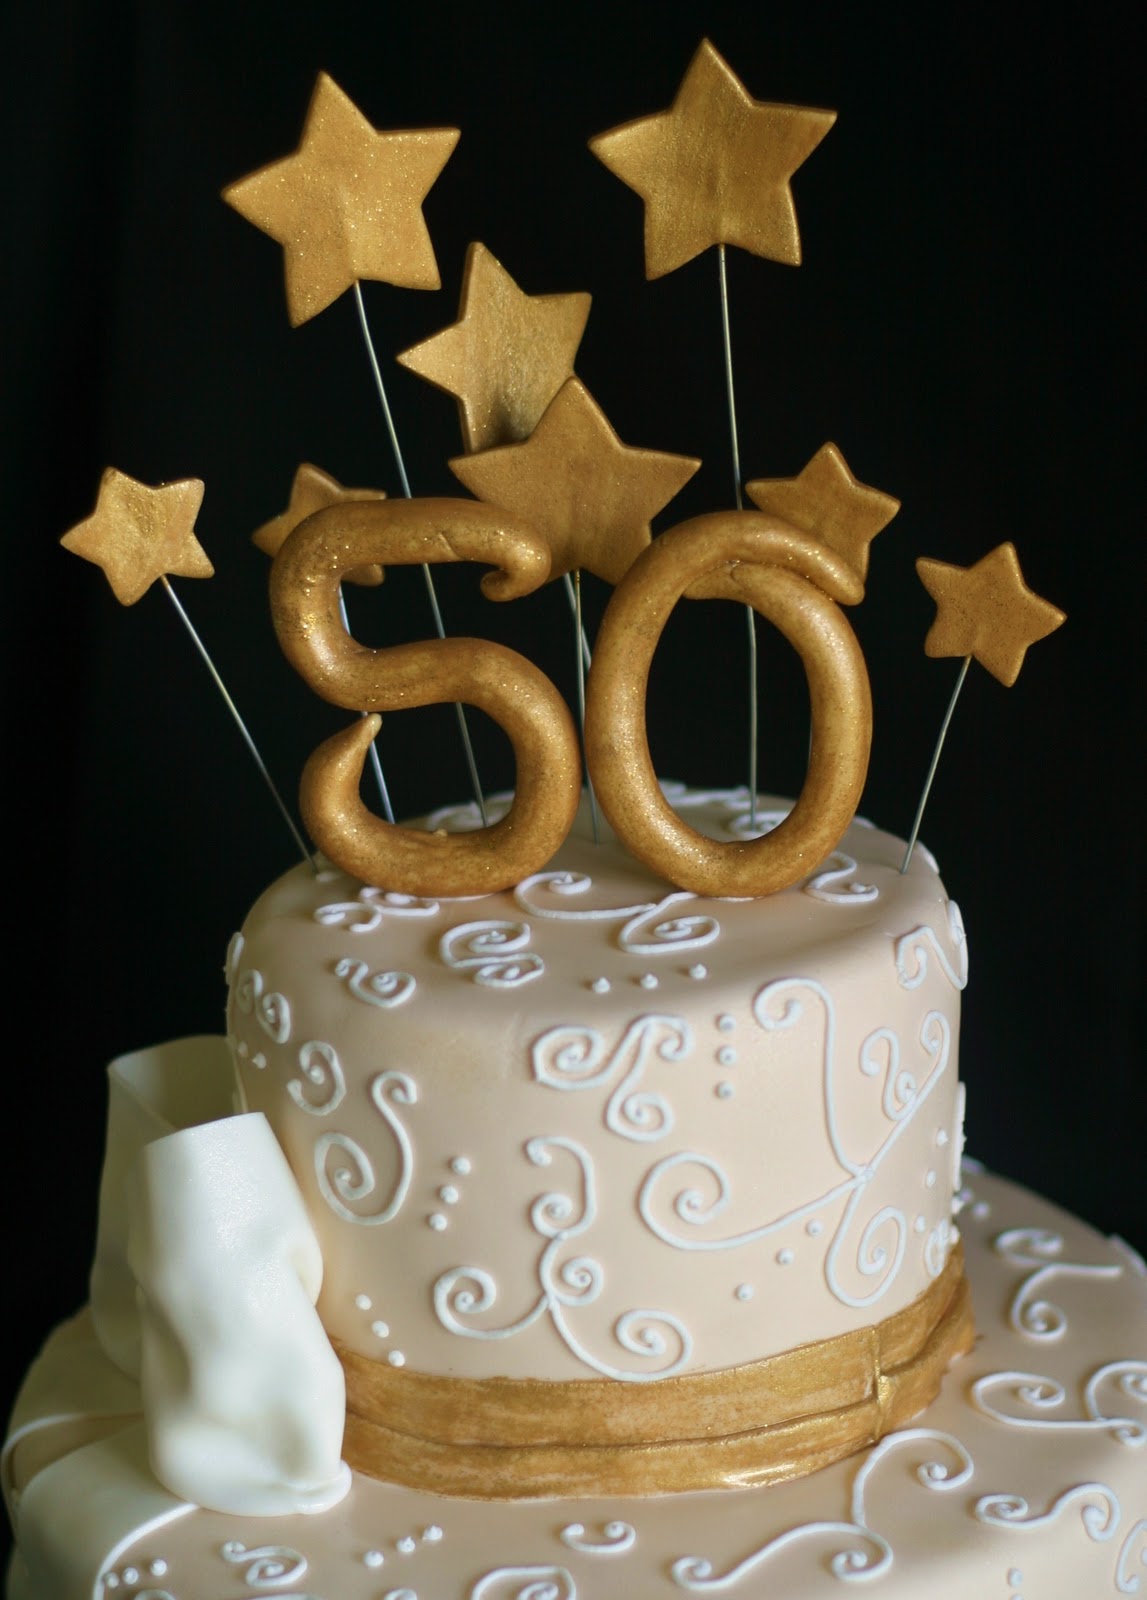 Elegant 50th birthday cake - Cake by Raindrops - CakesDecor